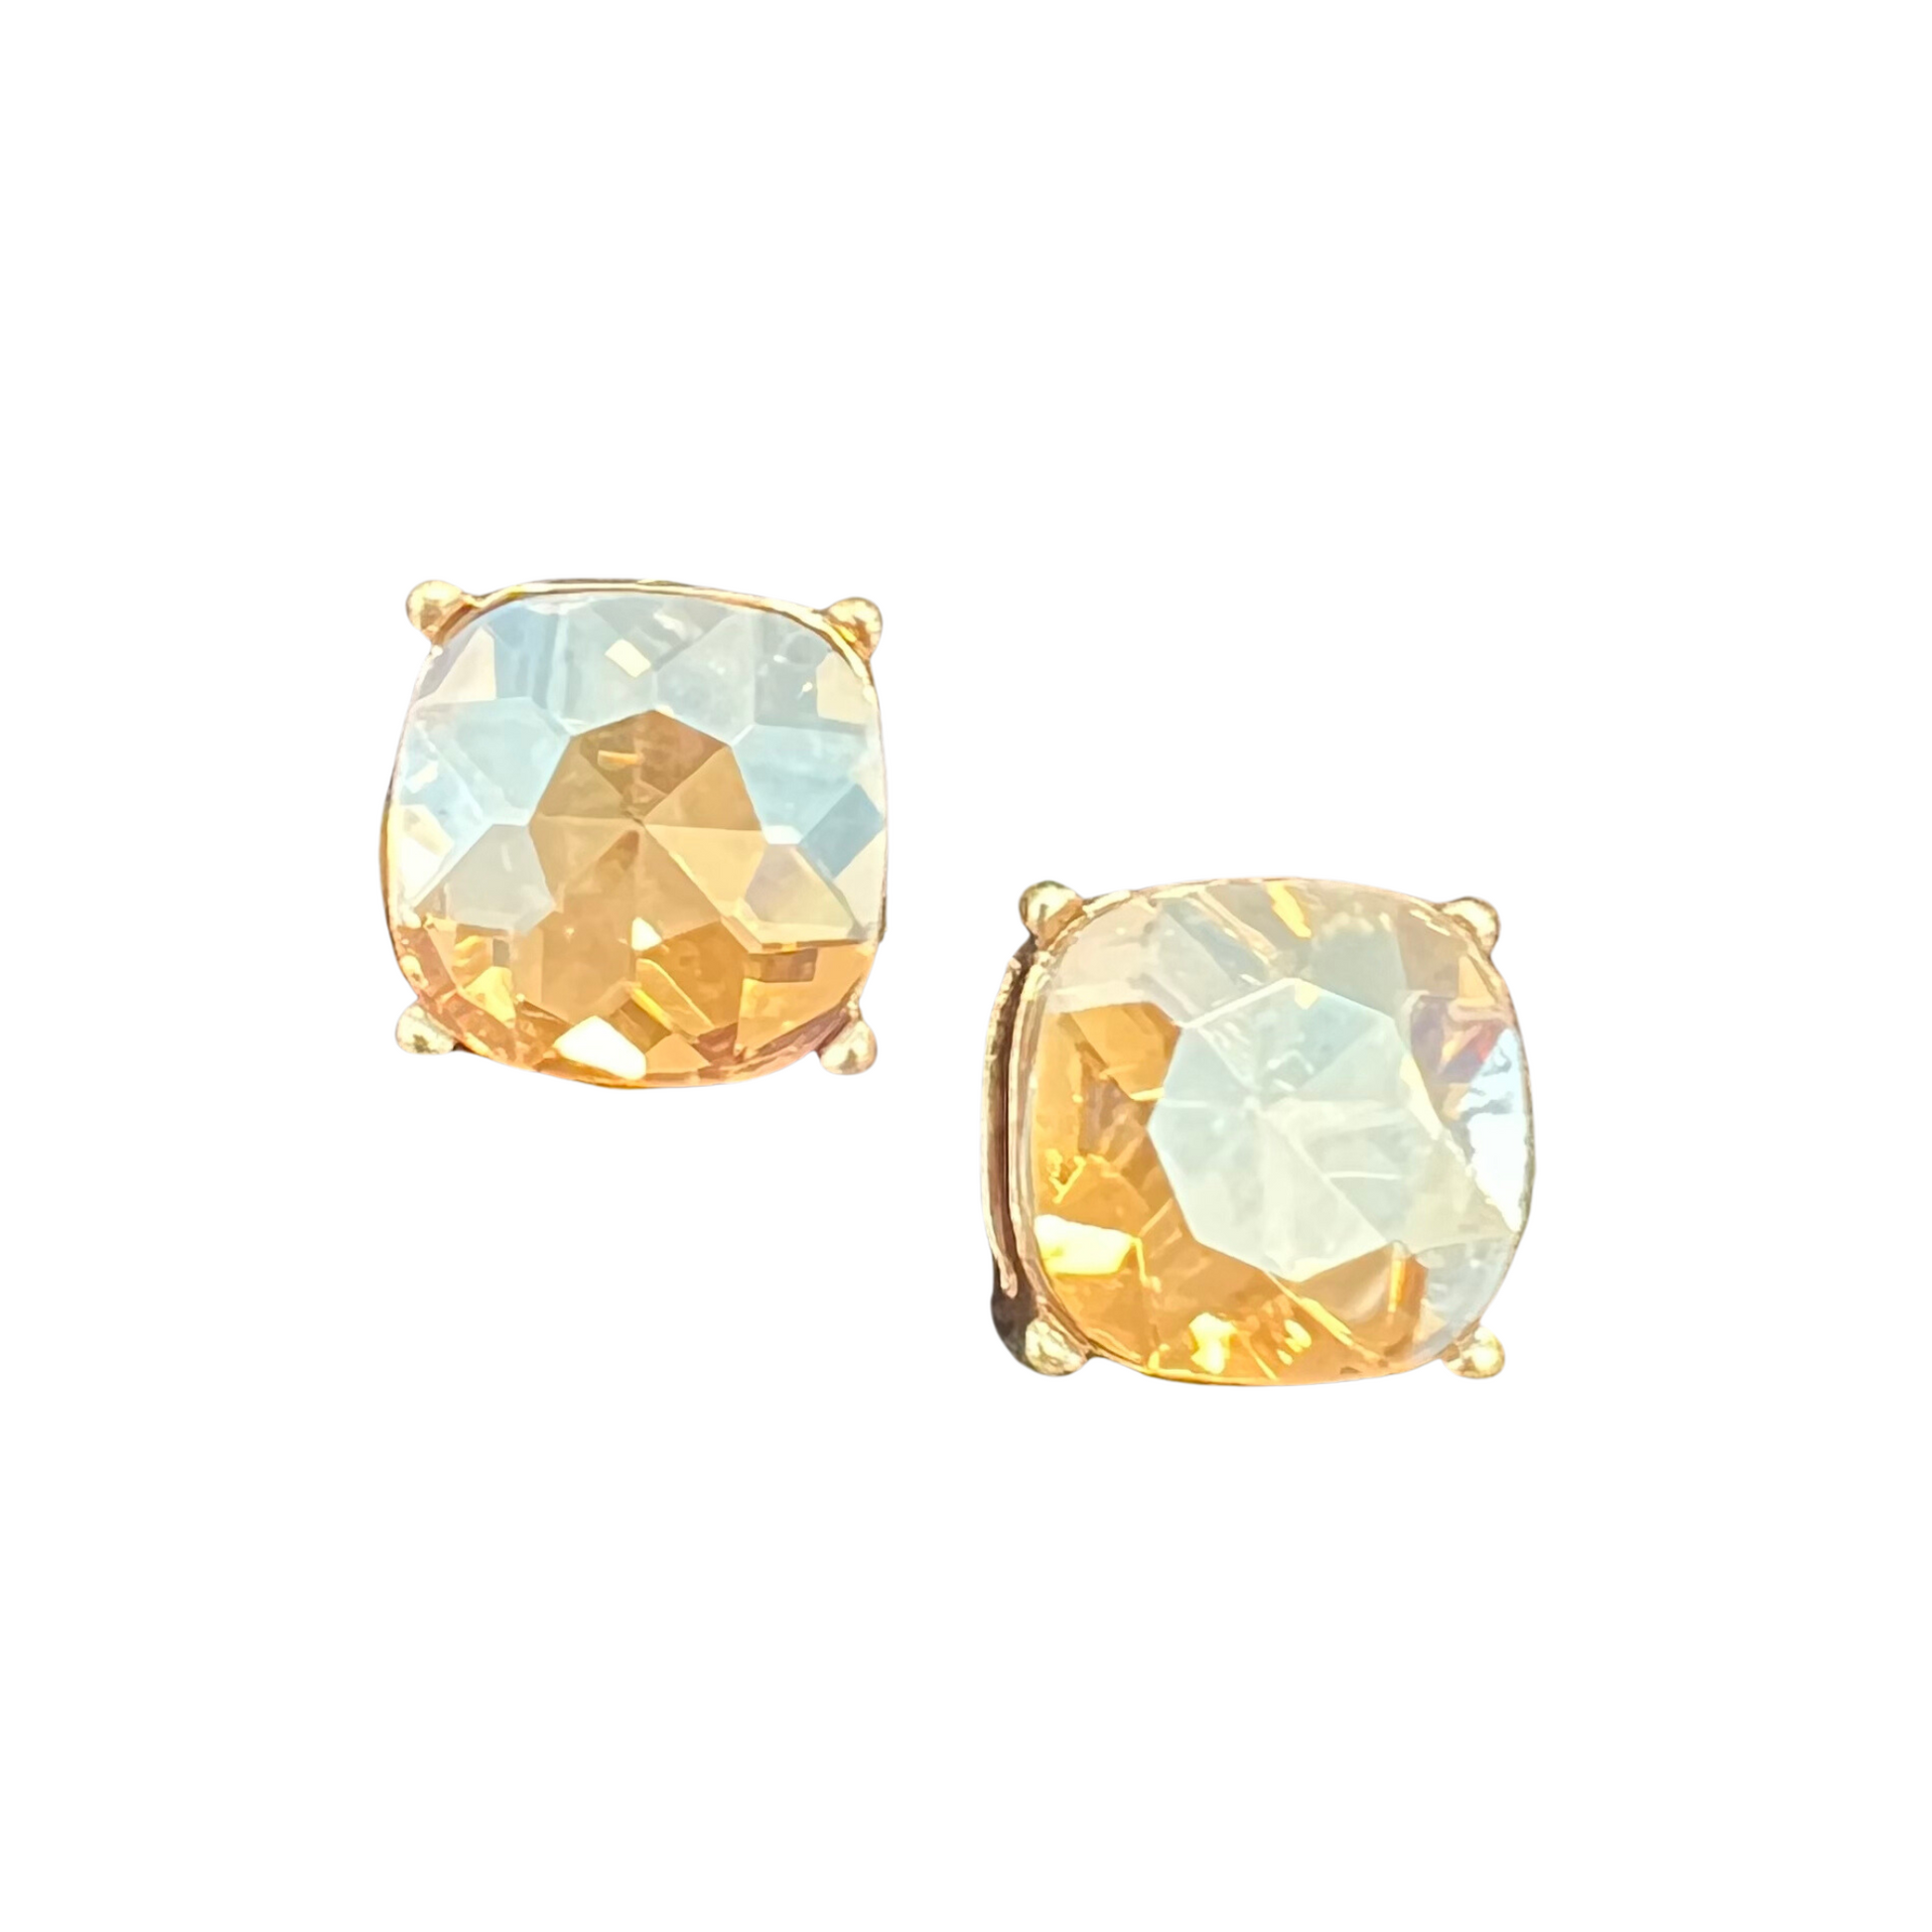 Large gold stone stud earrings